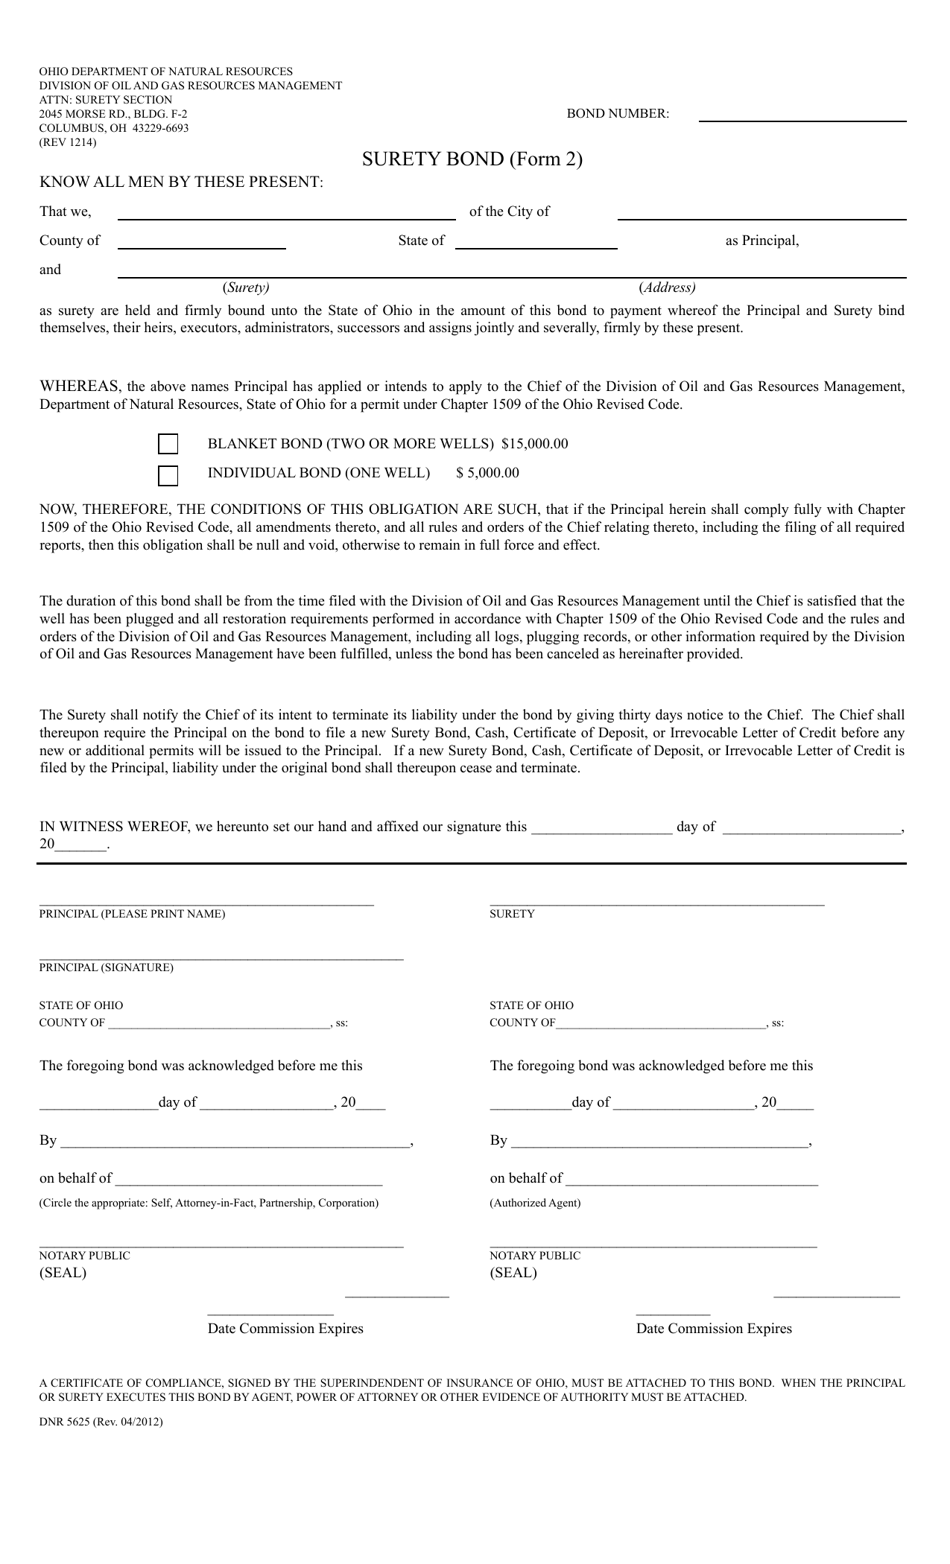 Form DNR5625 (2) Surety Bond - Ohio, Page 1